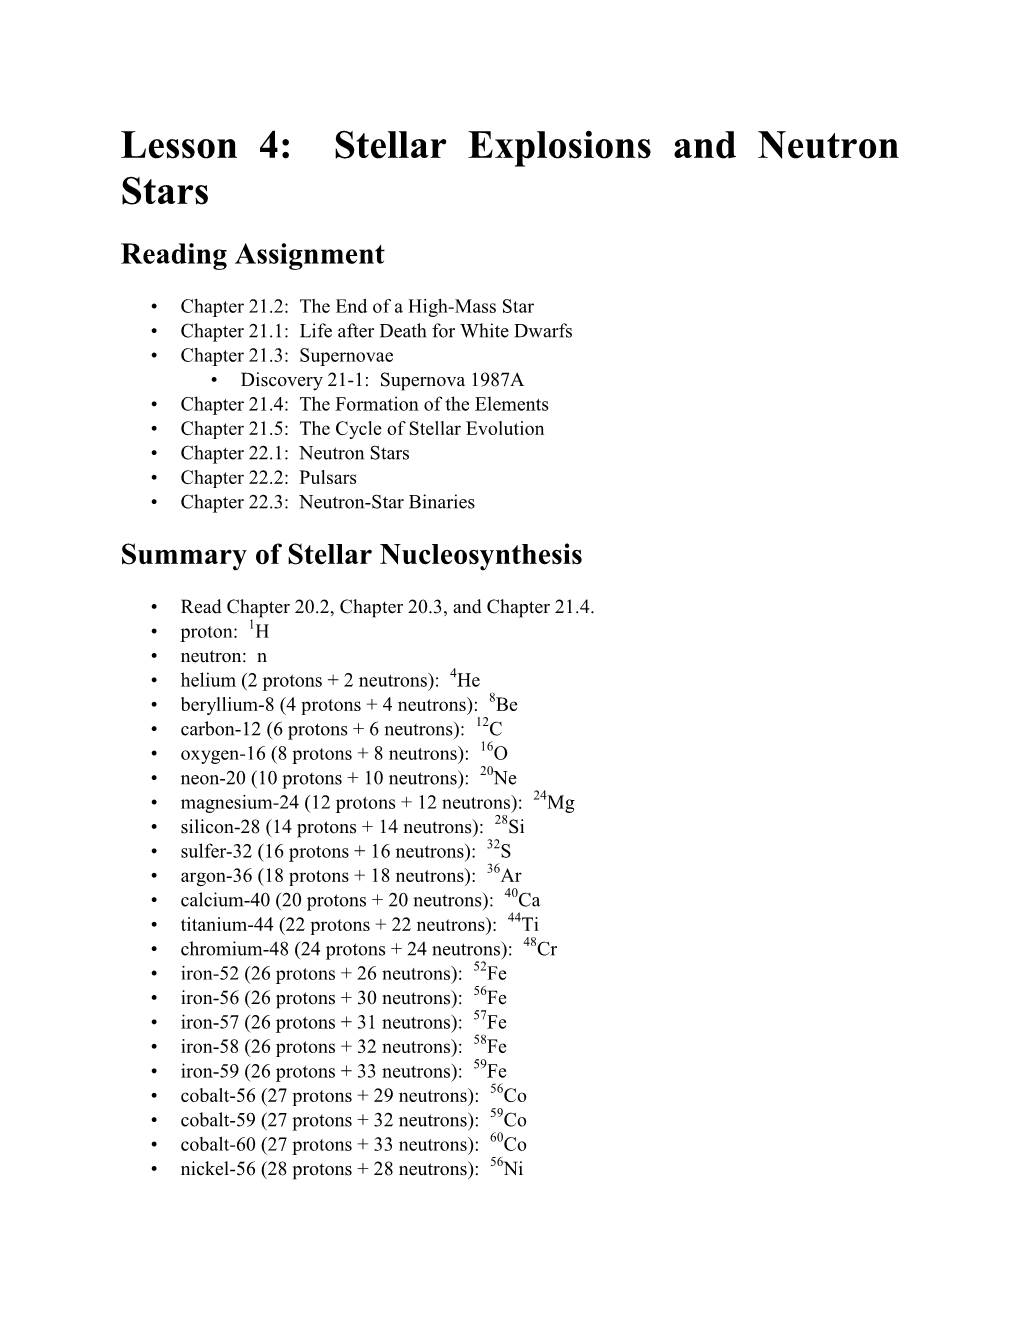 Lesson 4: Stellar Explosions and Neutron Stars